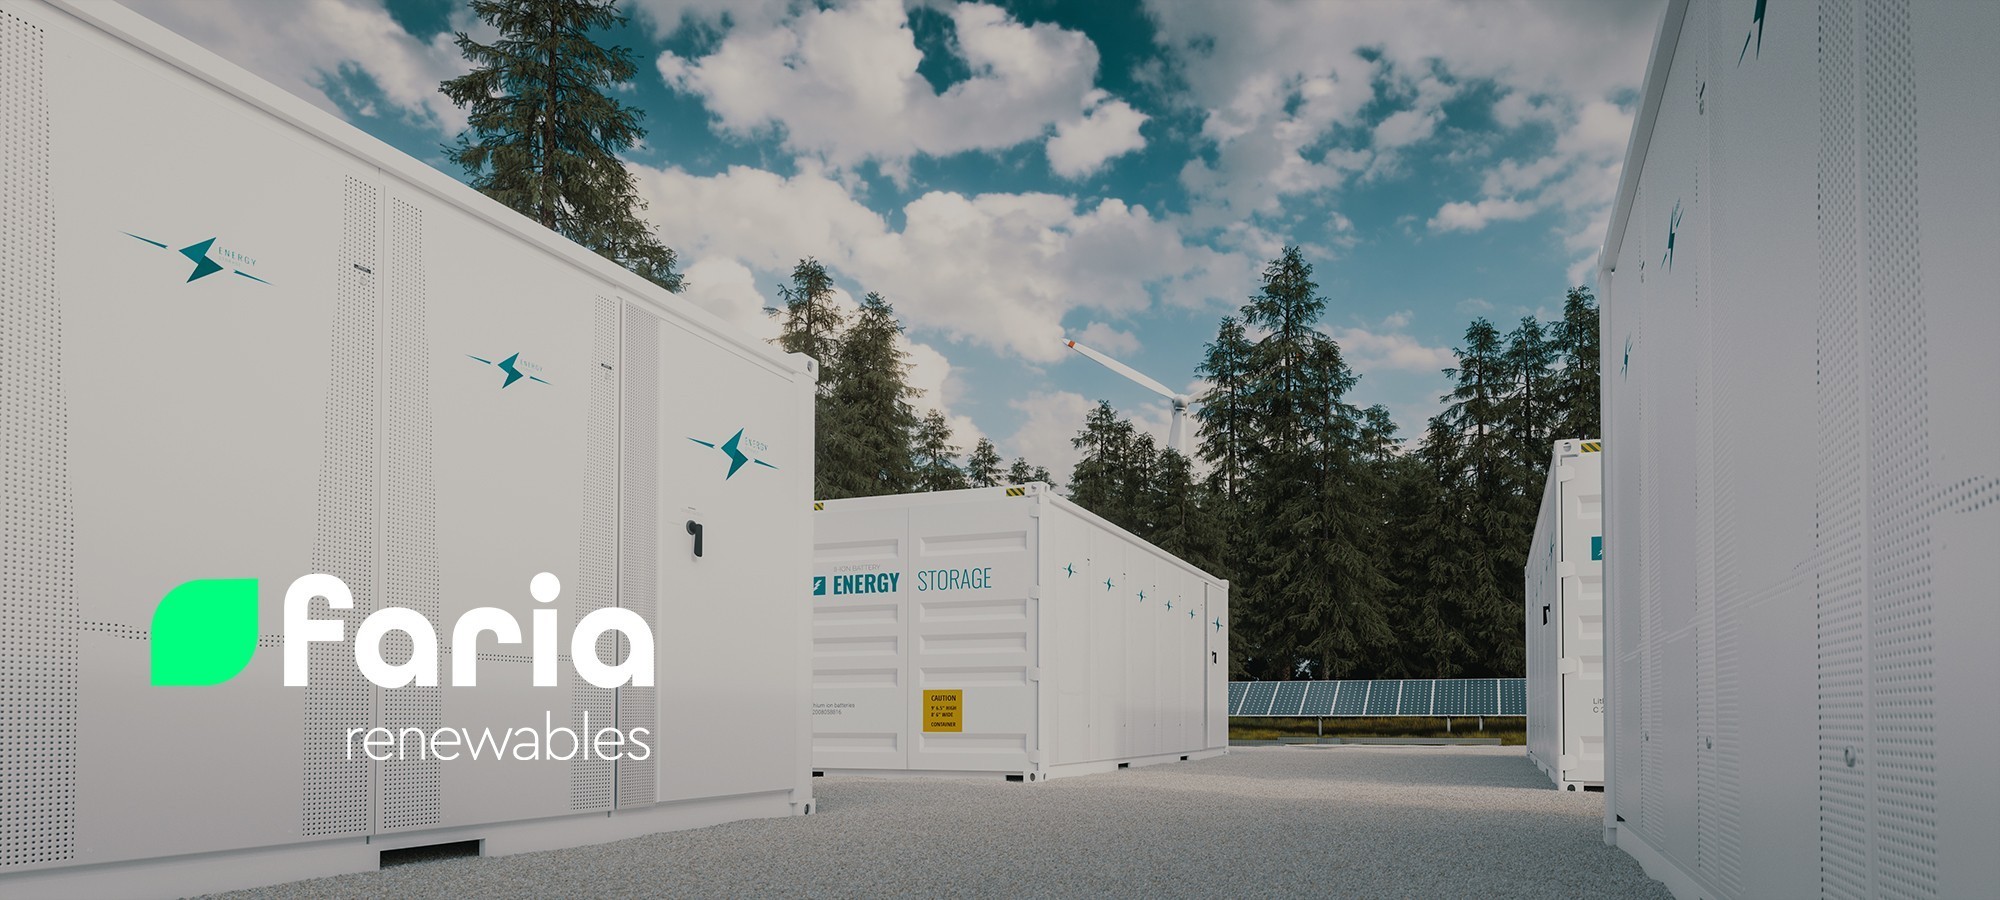 FARIA Renewables: Στους «νικητές» της 2ης ανταγωνιστικής διαδικασίας για standalone μπαταρίες,